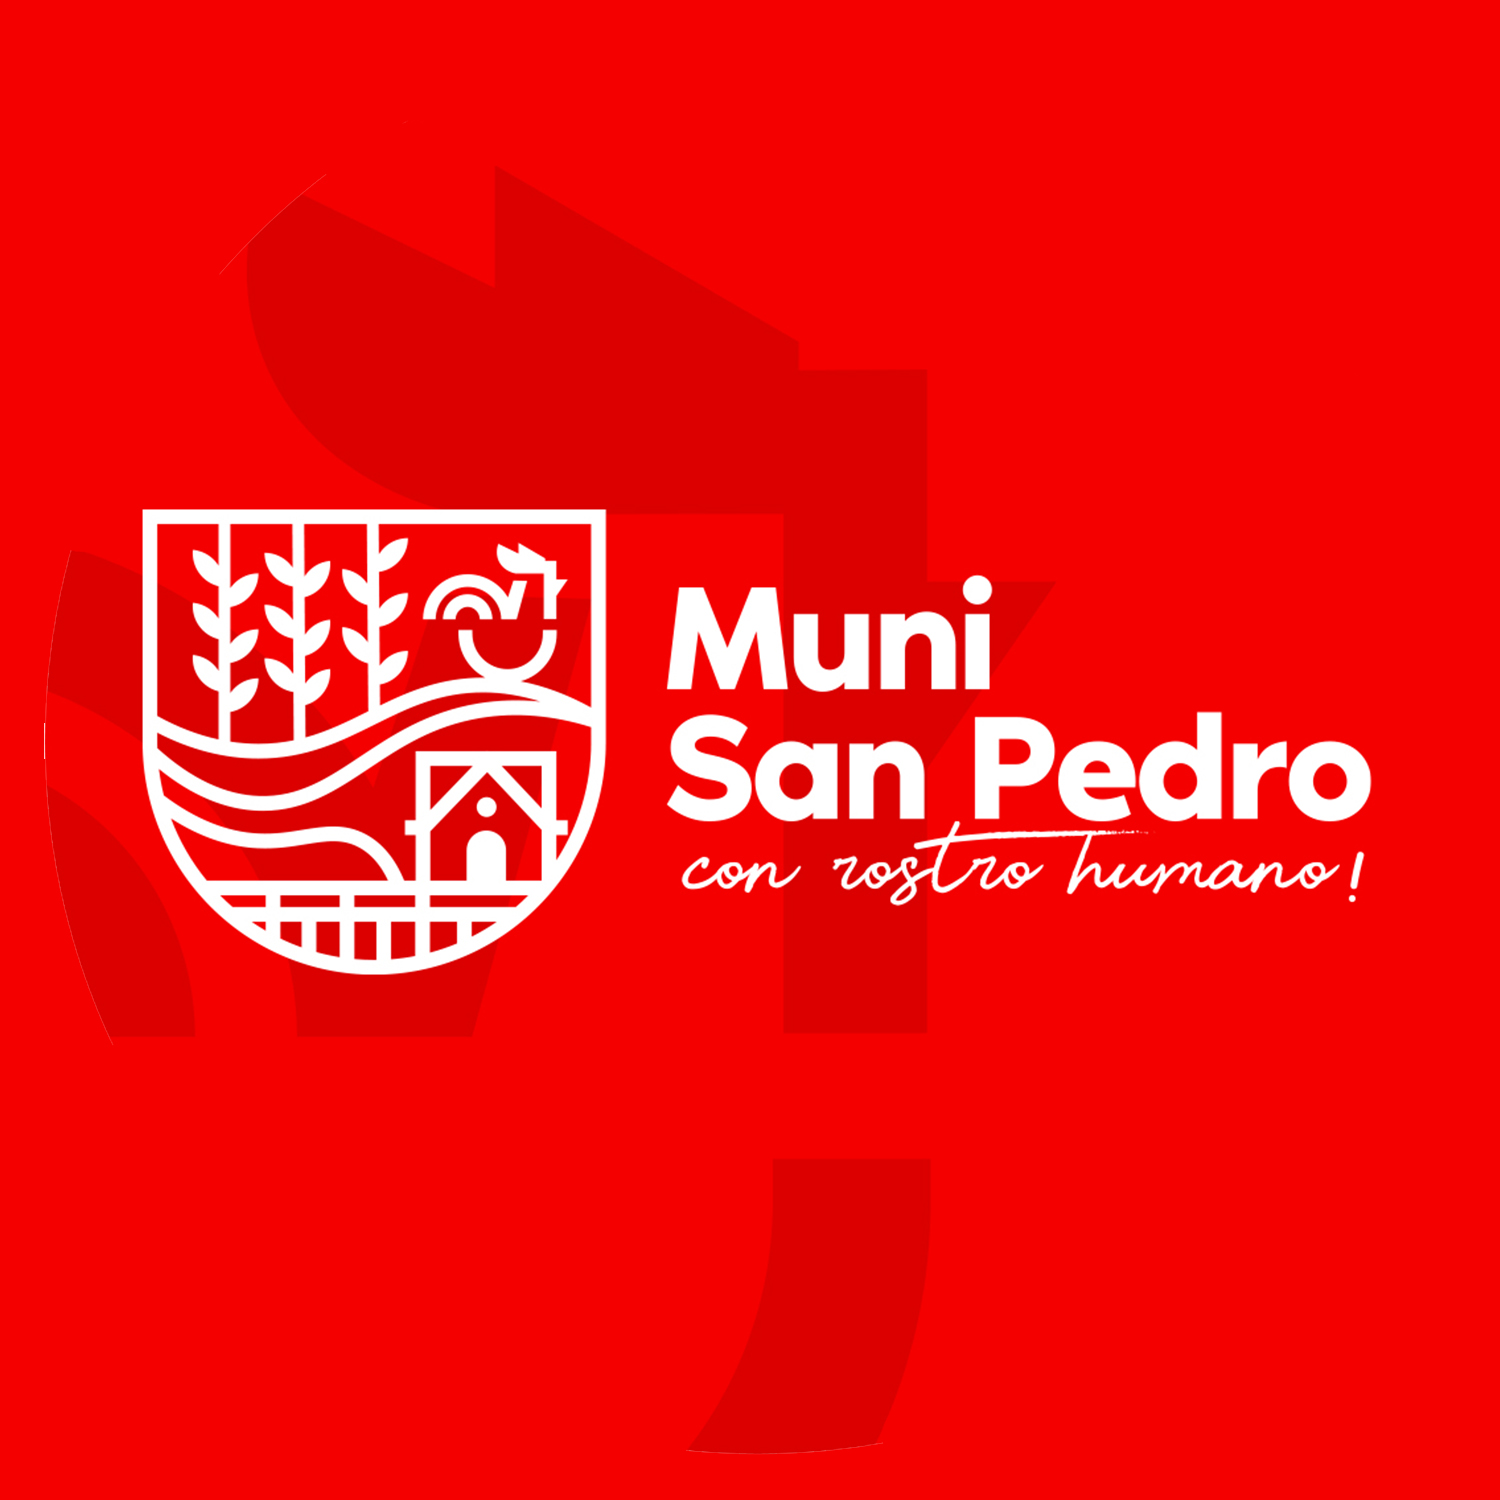 Muni San Pedro